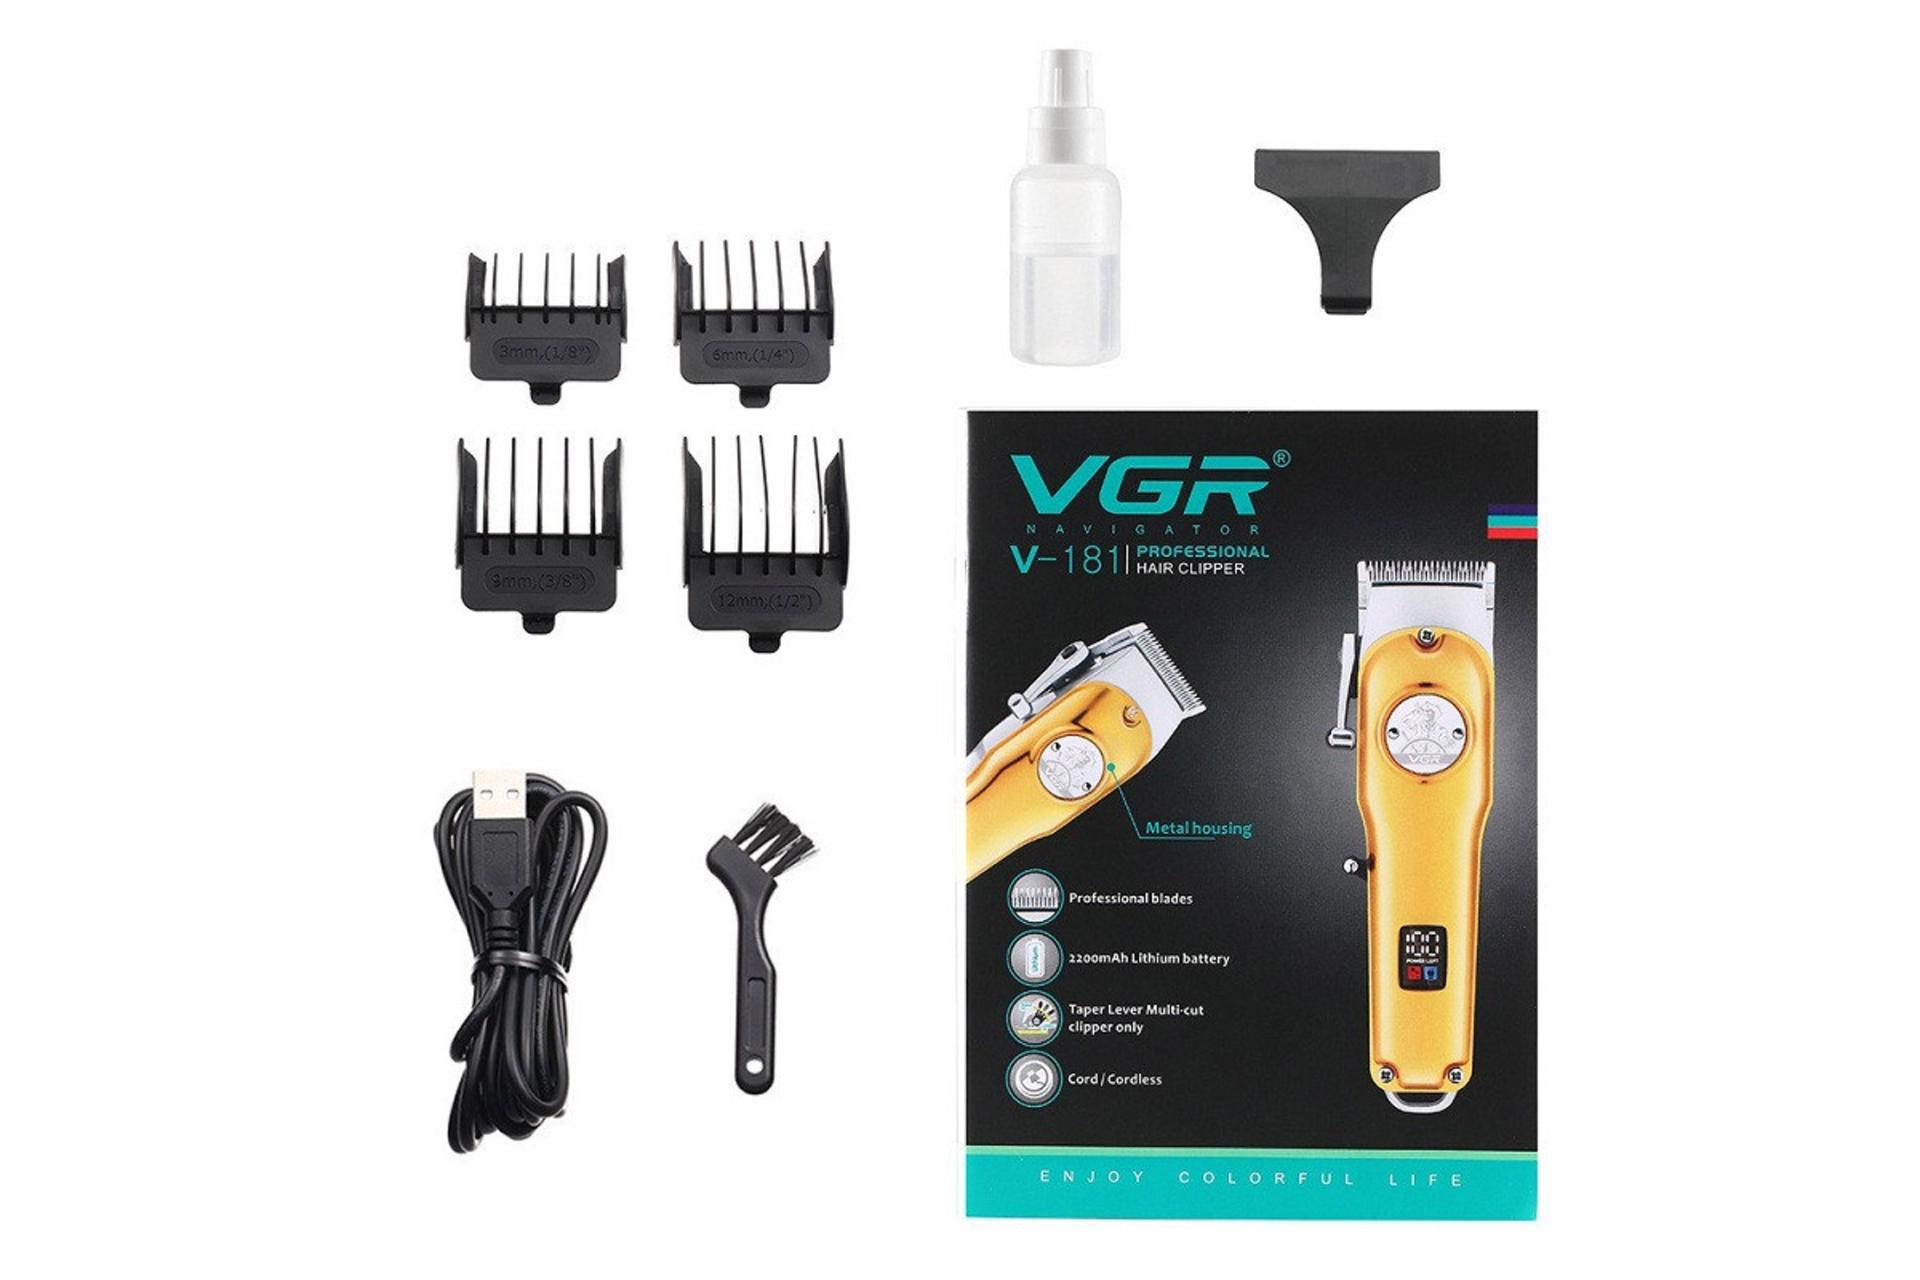 ماشین اصلاح و ریش تراش وی جی ار VGR V-181 بسته بندی